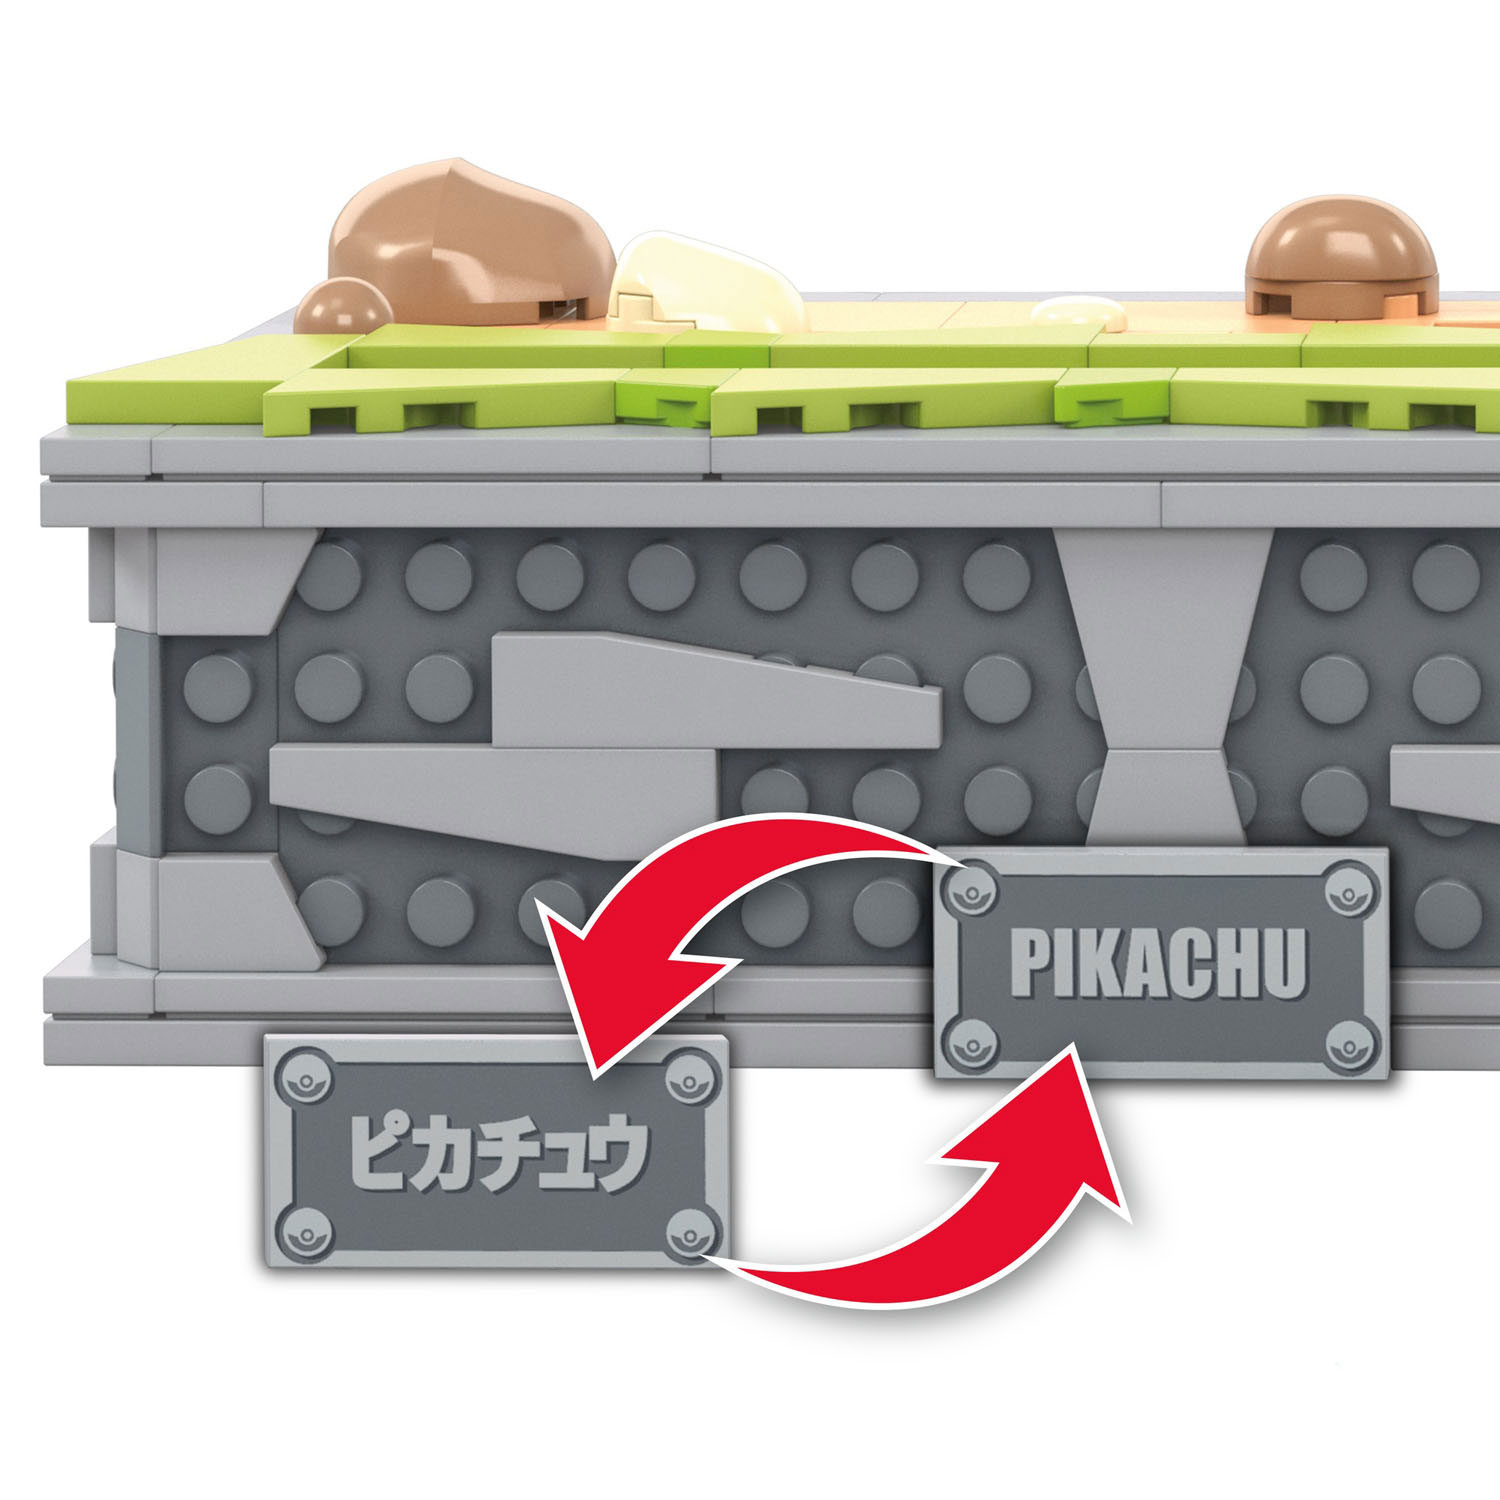 Mega Construx - Pokémon Motion Pikachu